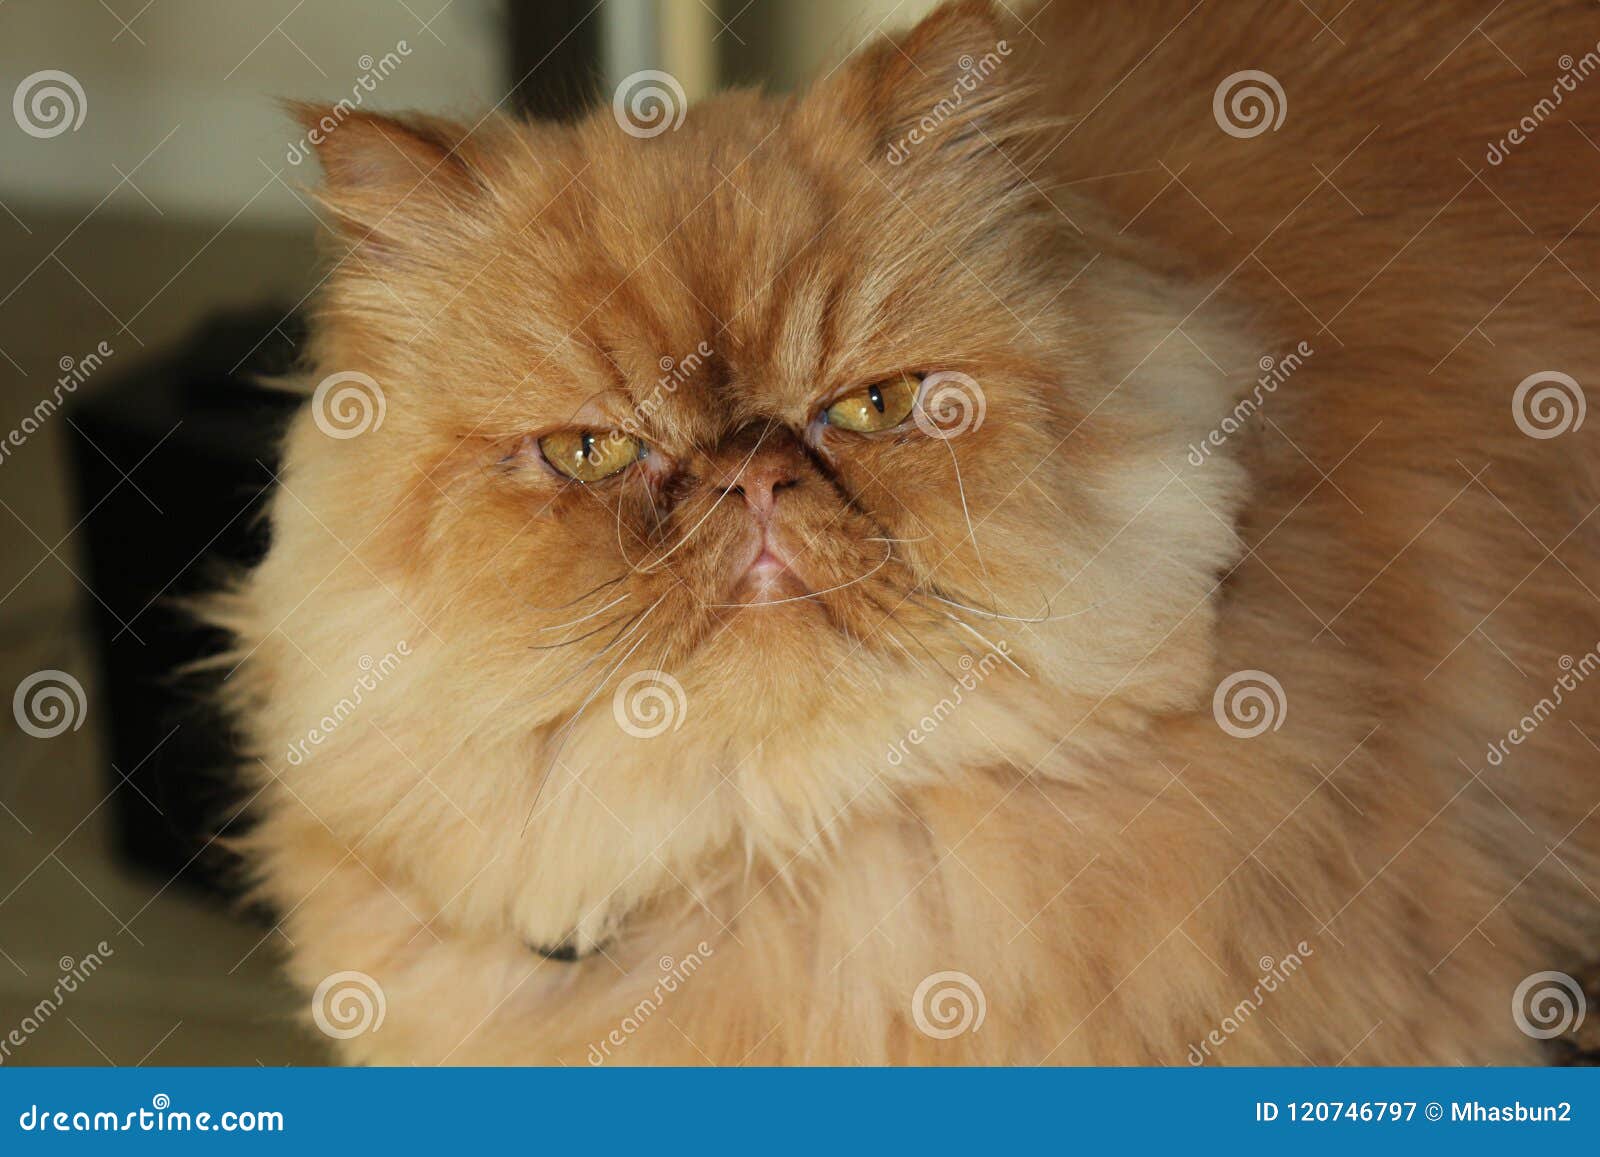  Mad  Cat  stock image Image of face orange  madness 